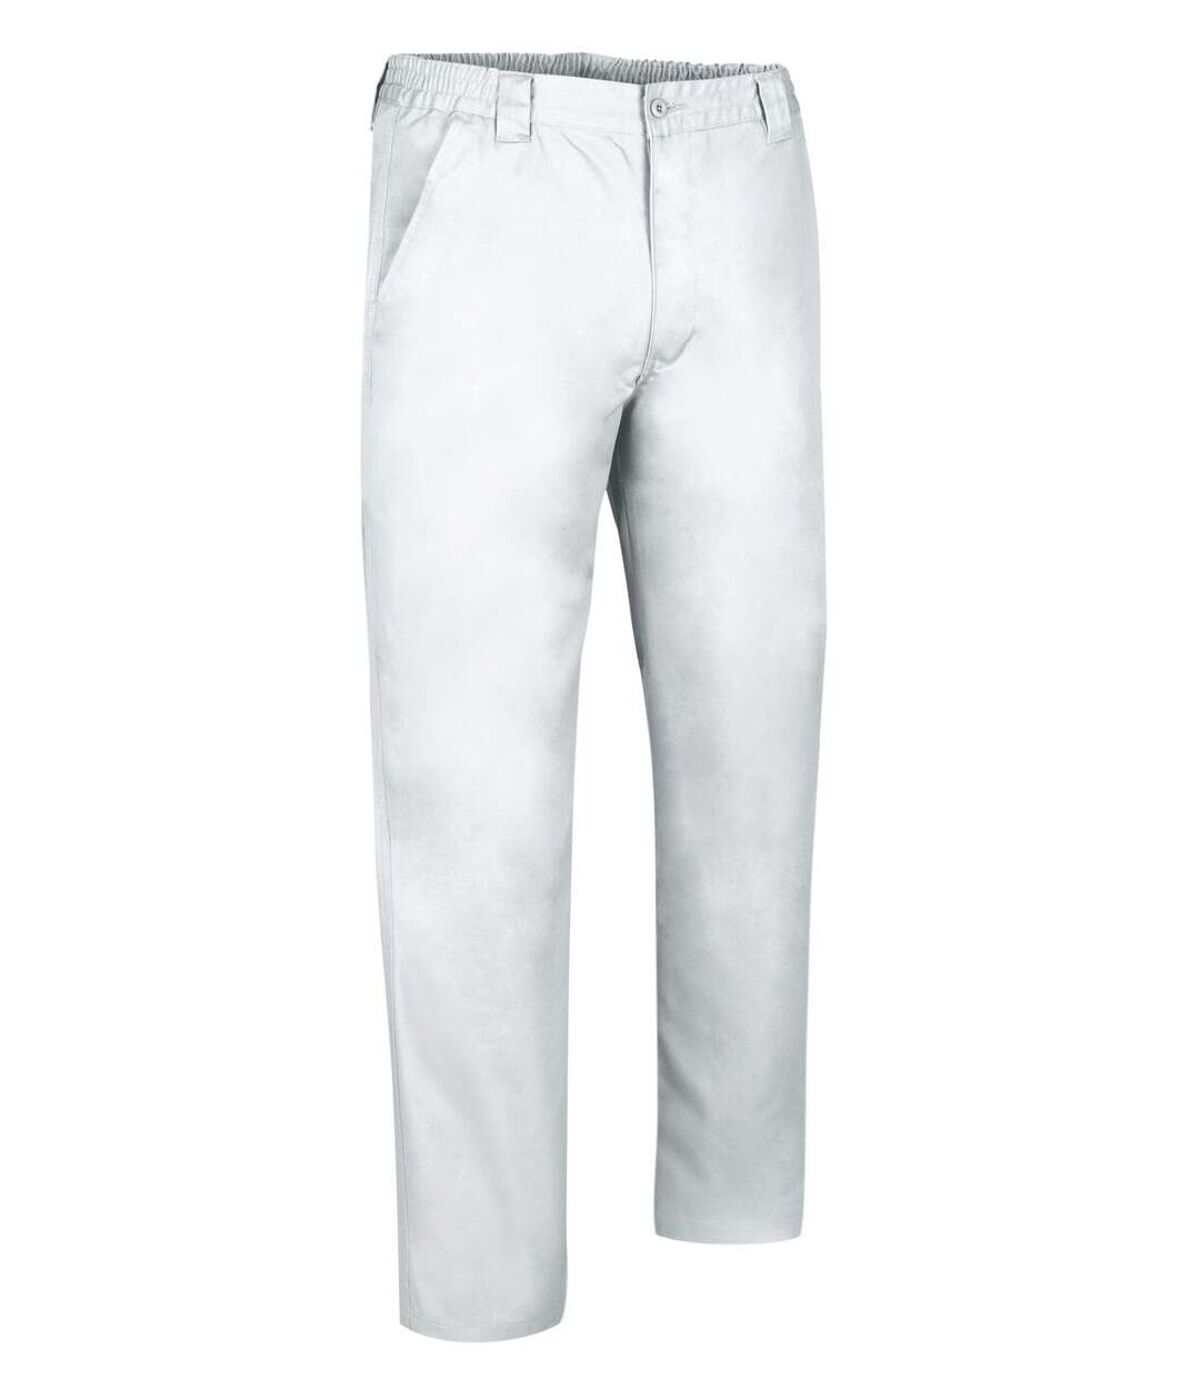 Pantalon de travail - Homme - COSMO - blanc